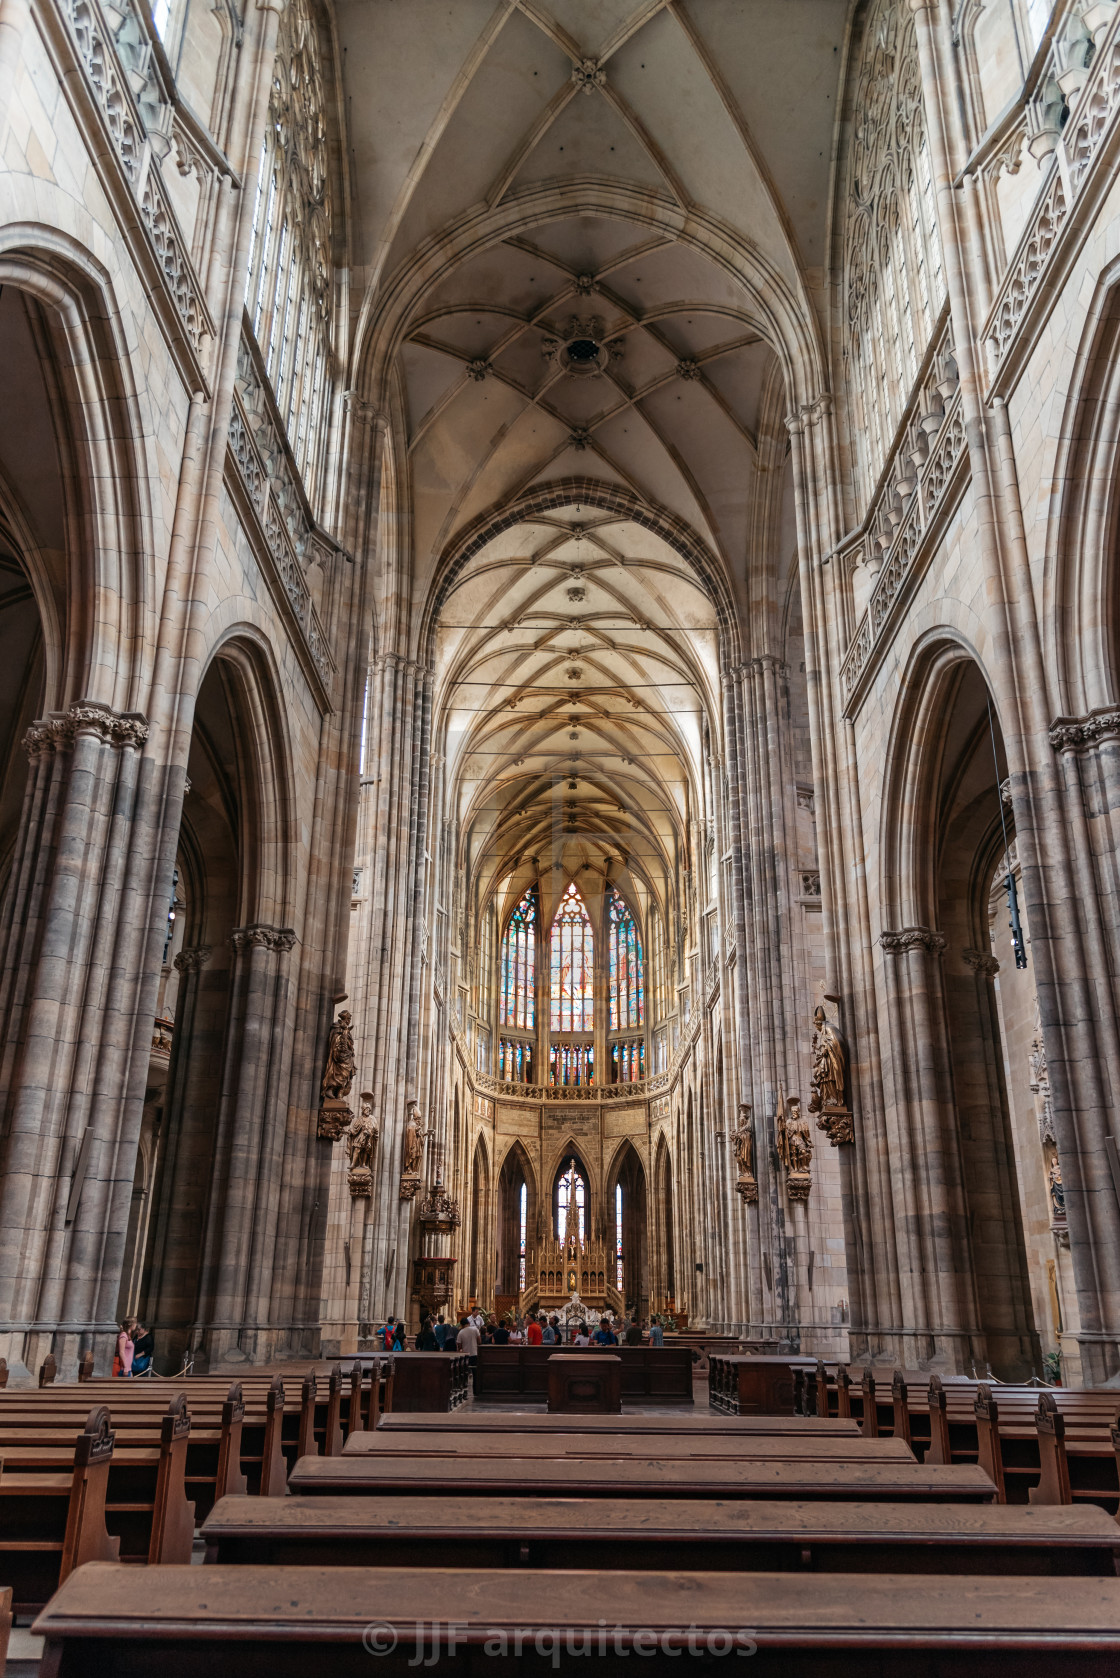 "St. Vitus Cathedral in Prague" stock image